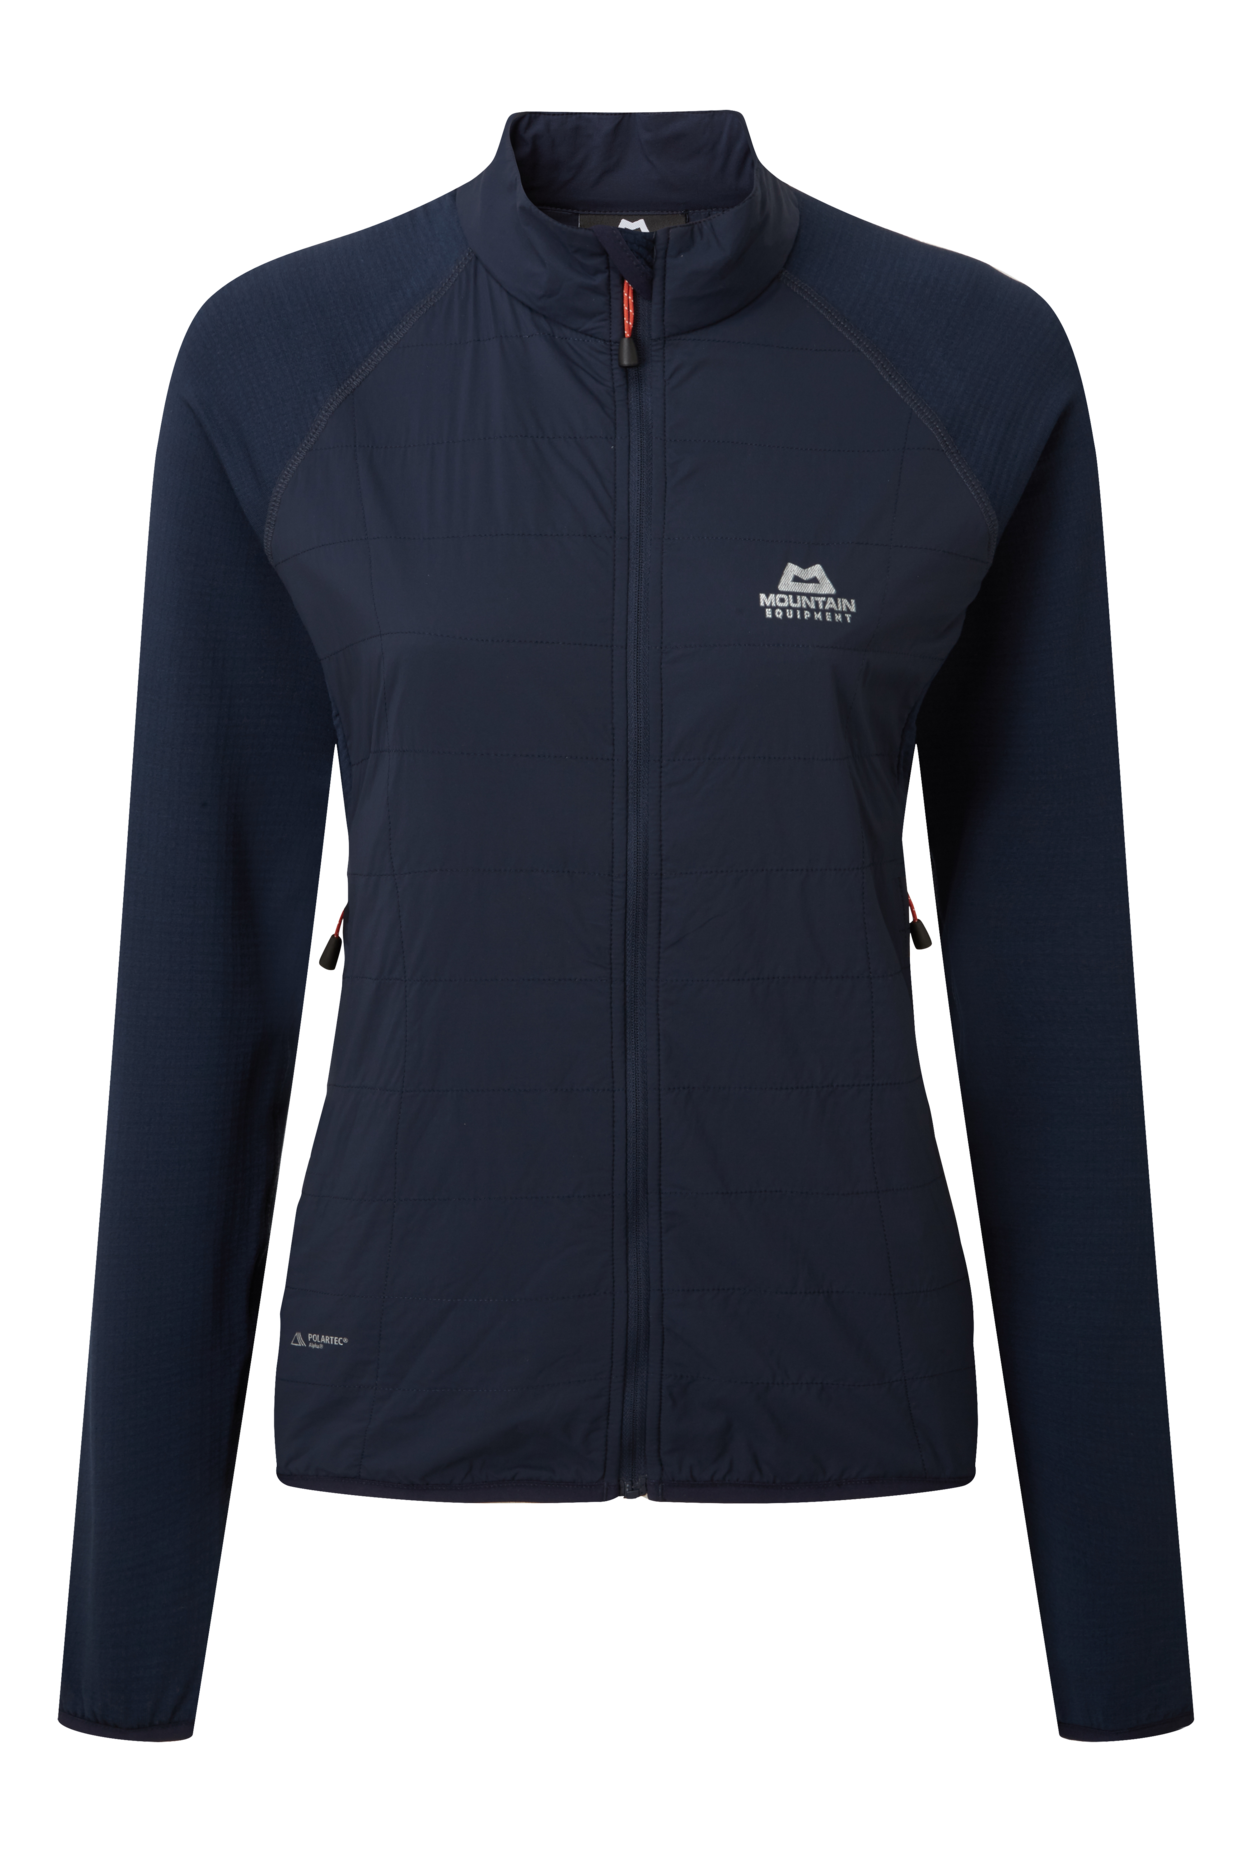 Mountain Equipment Switch Jacket - Fleece jacket - Women's